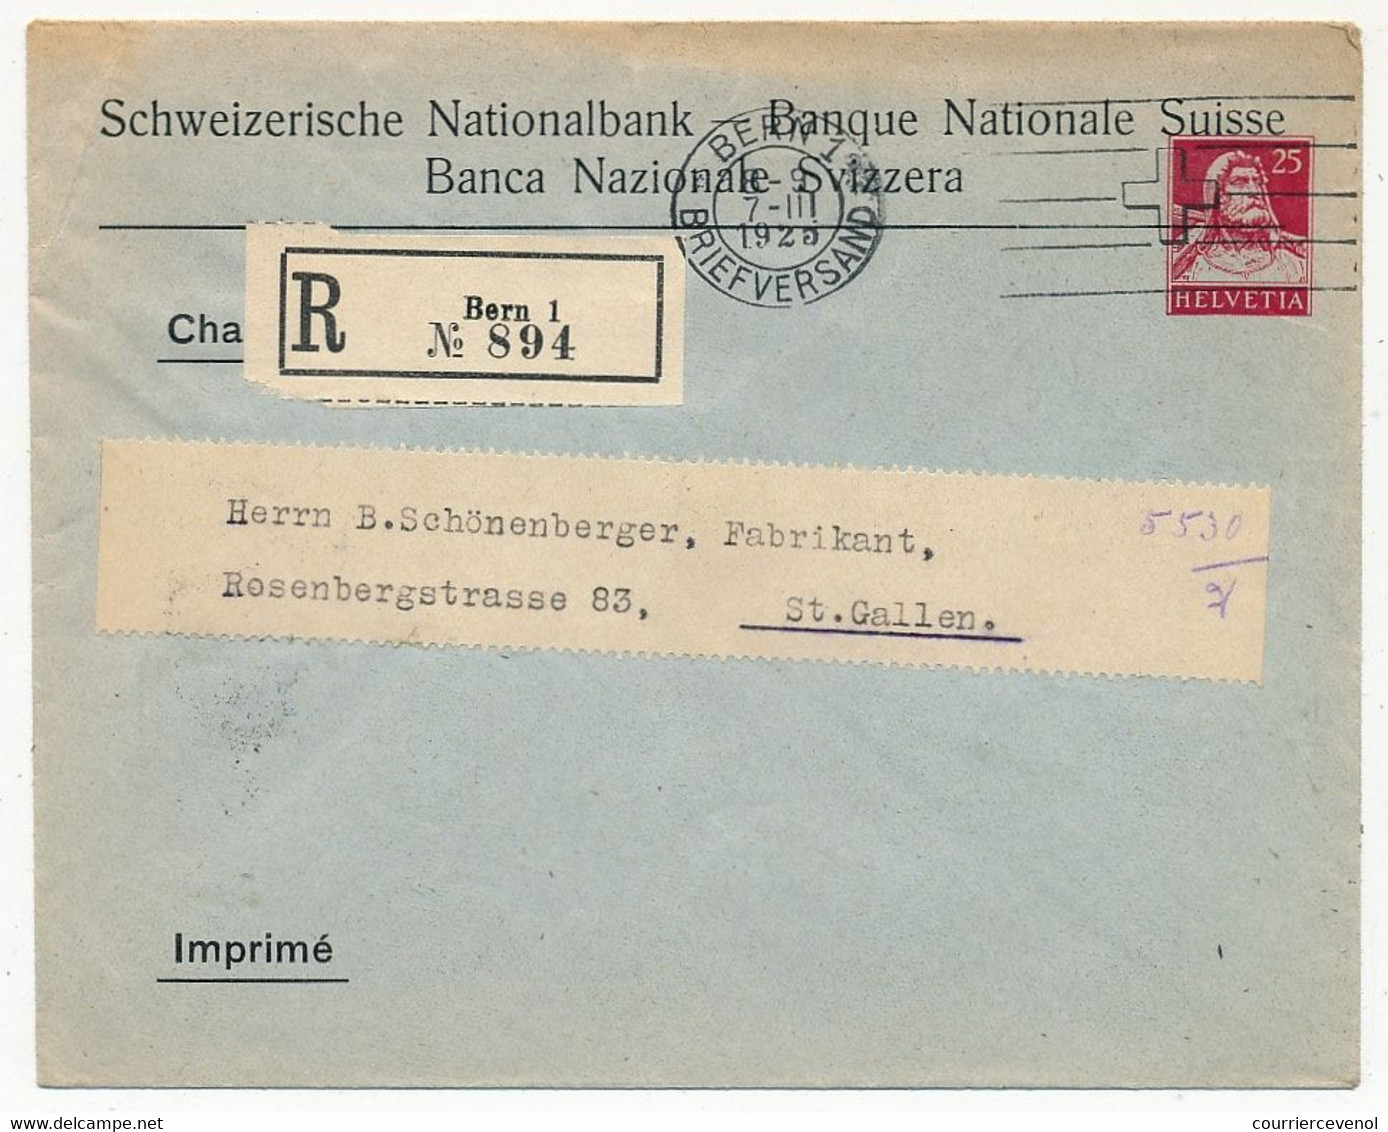 SUISSE - Enveloppe (Entier Postal PRIVÉ) 25c Helvetia - Banque Nationale Suisse - Recommandée Bern 1 - 1925 - Stamped Stationery